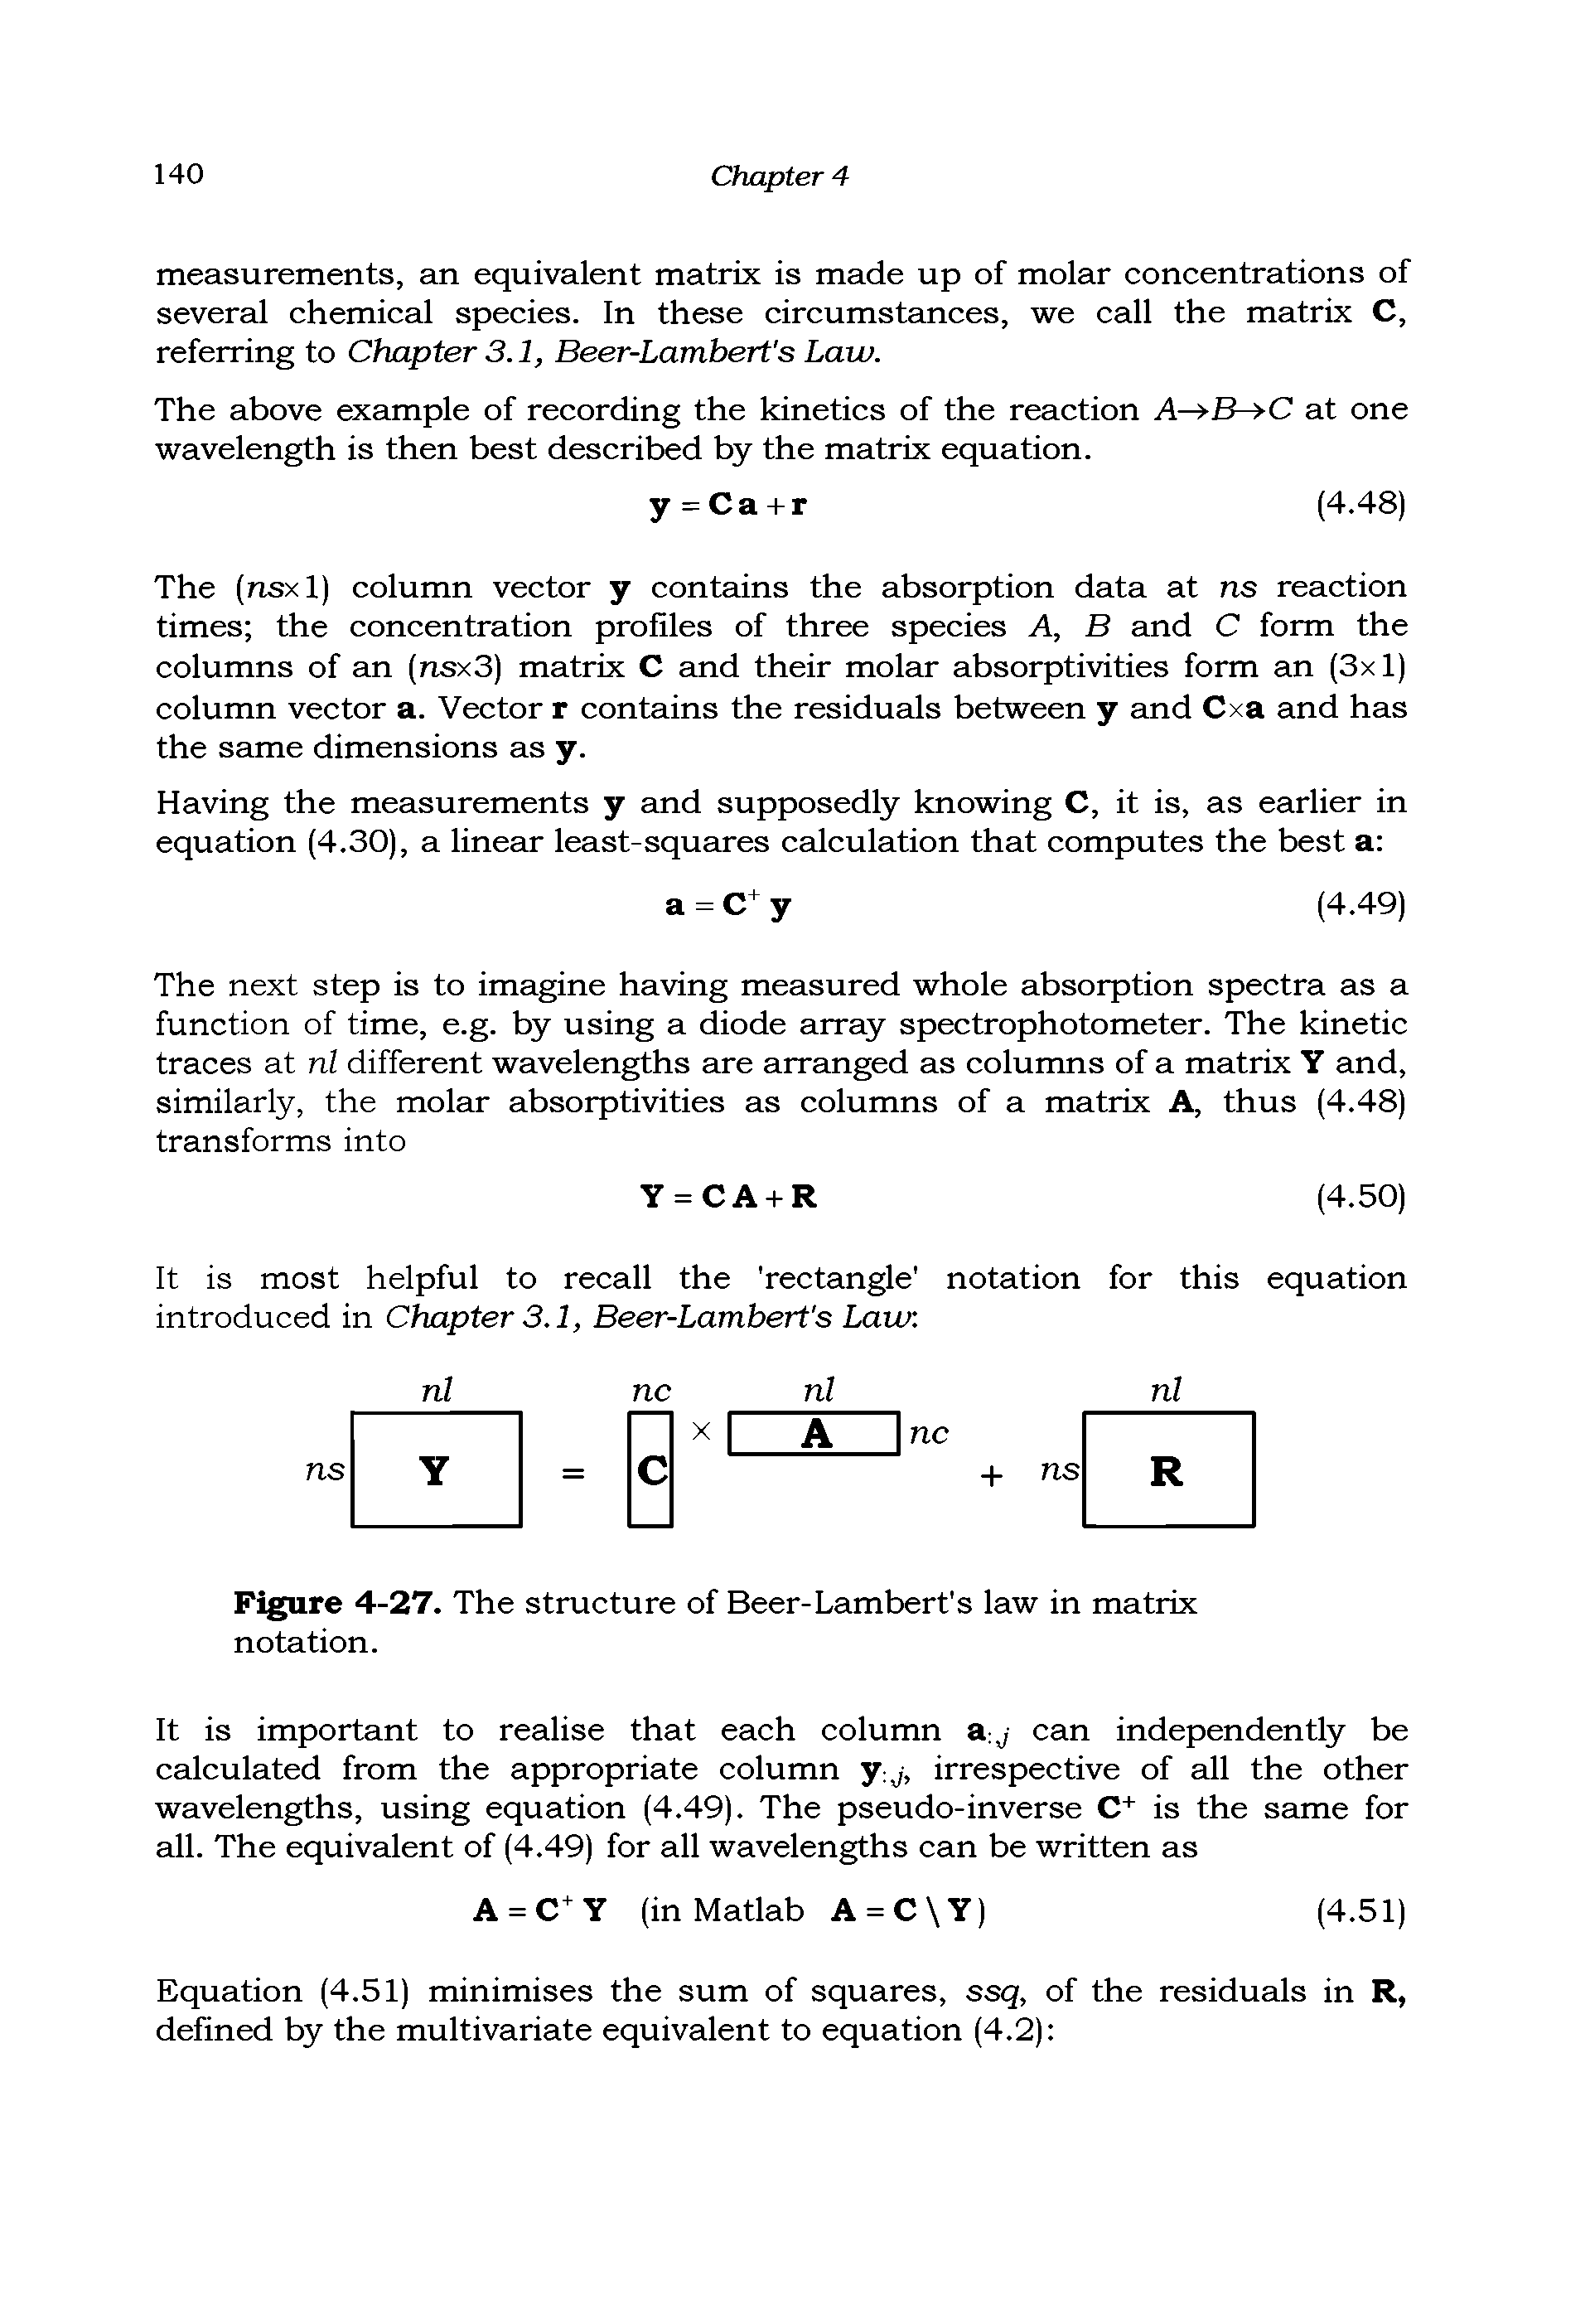 Figure 4-27. The structure of Beer-Lambert s law in matrix notation.